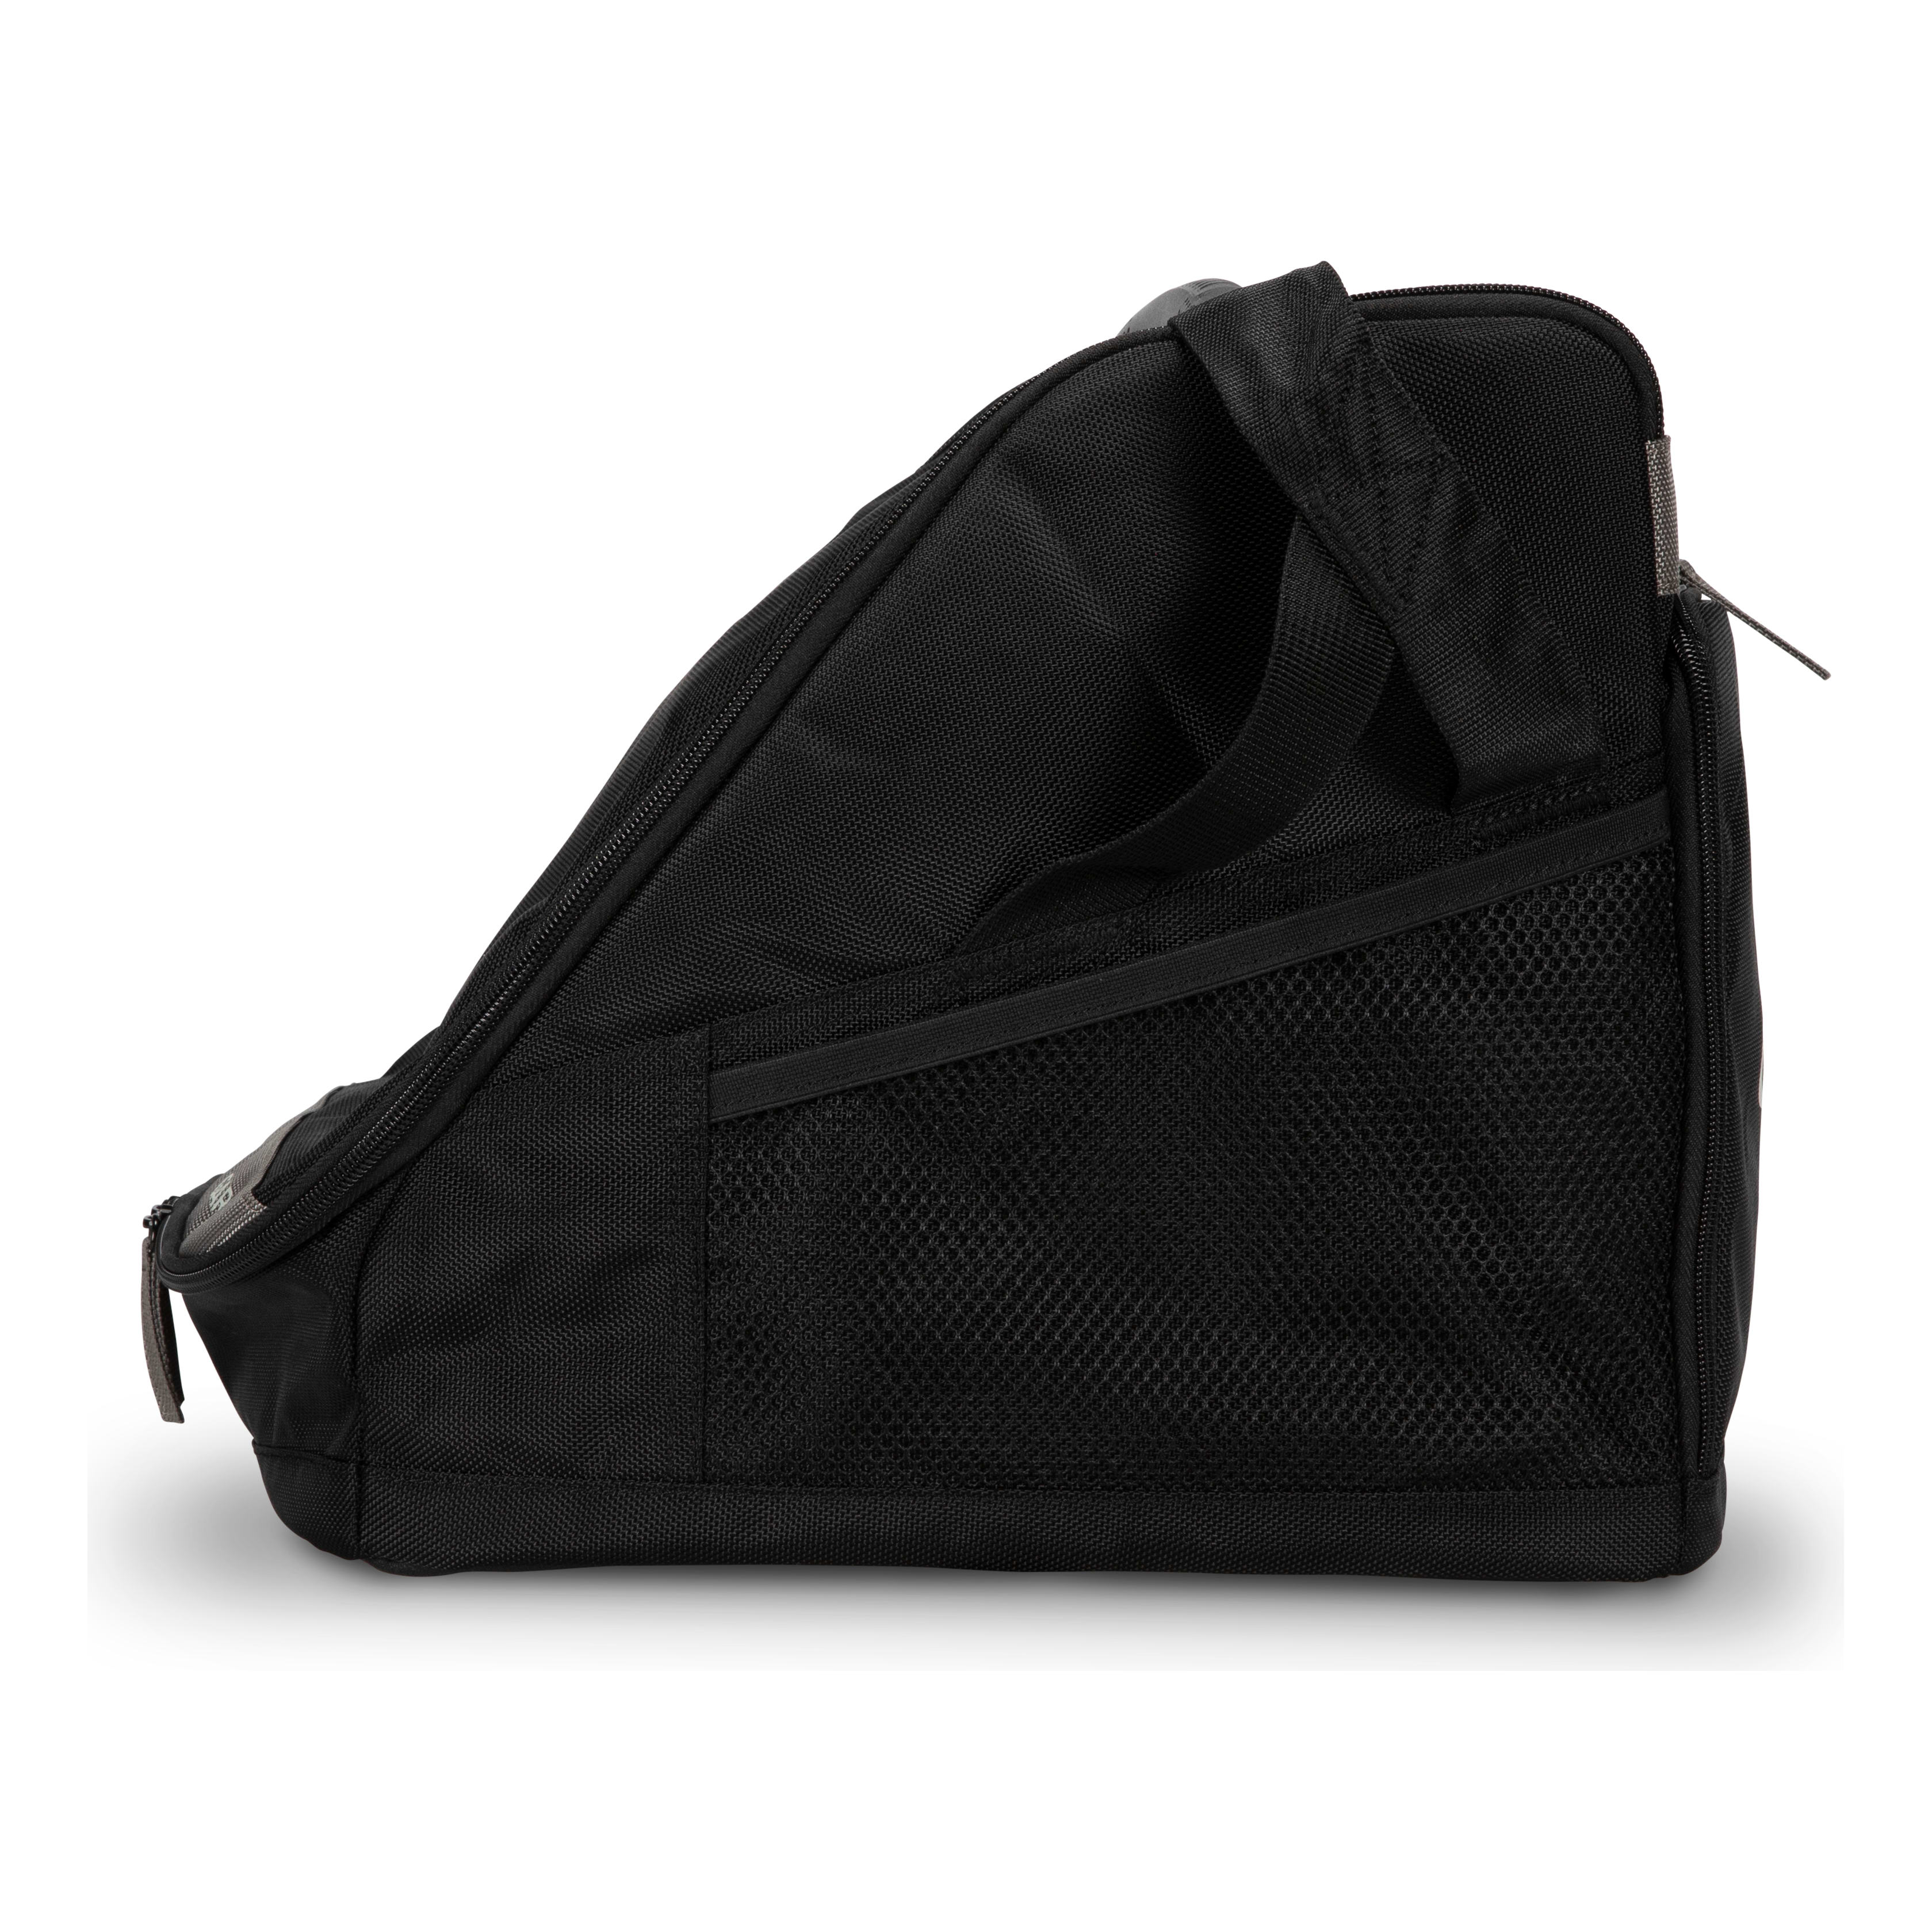 Garmin® Extra Large Carry Bag and Base 